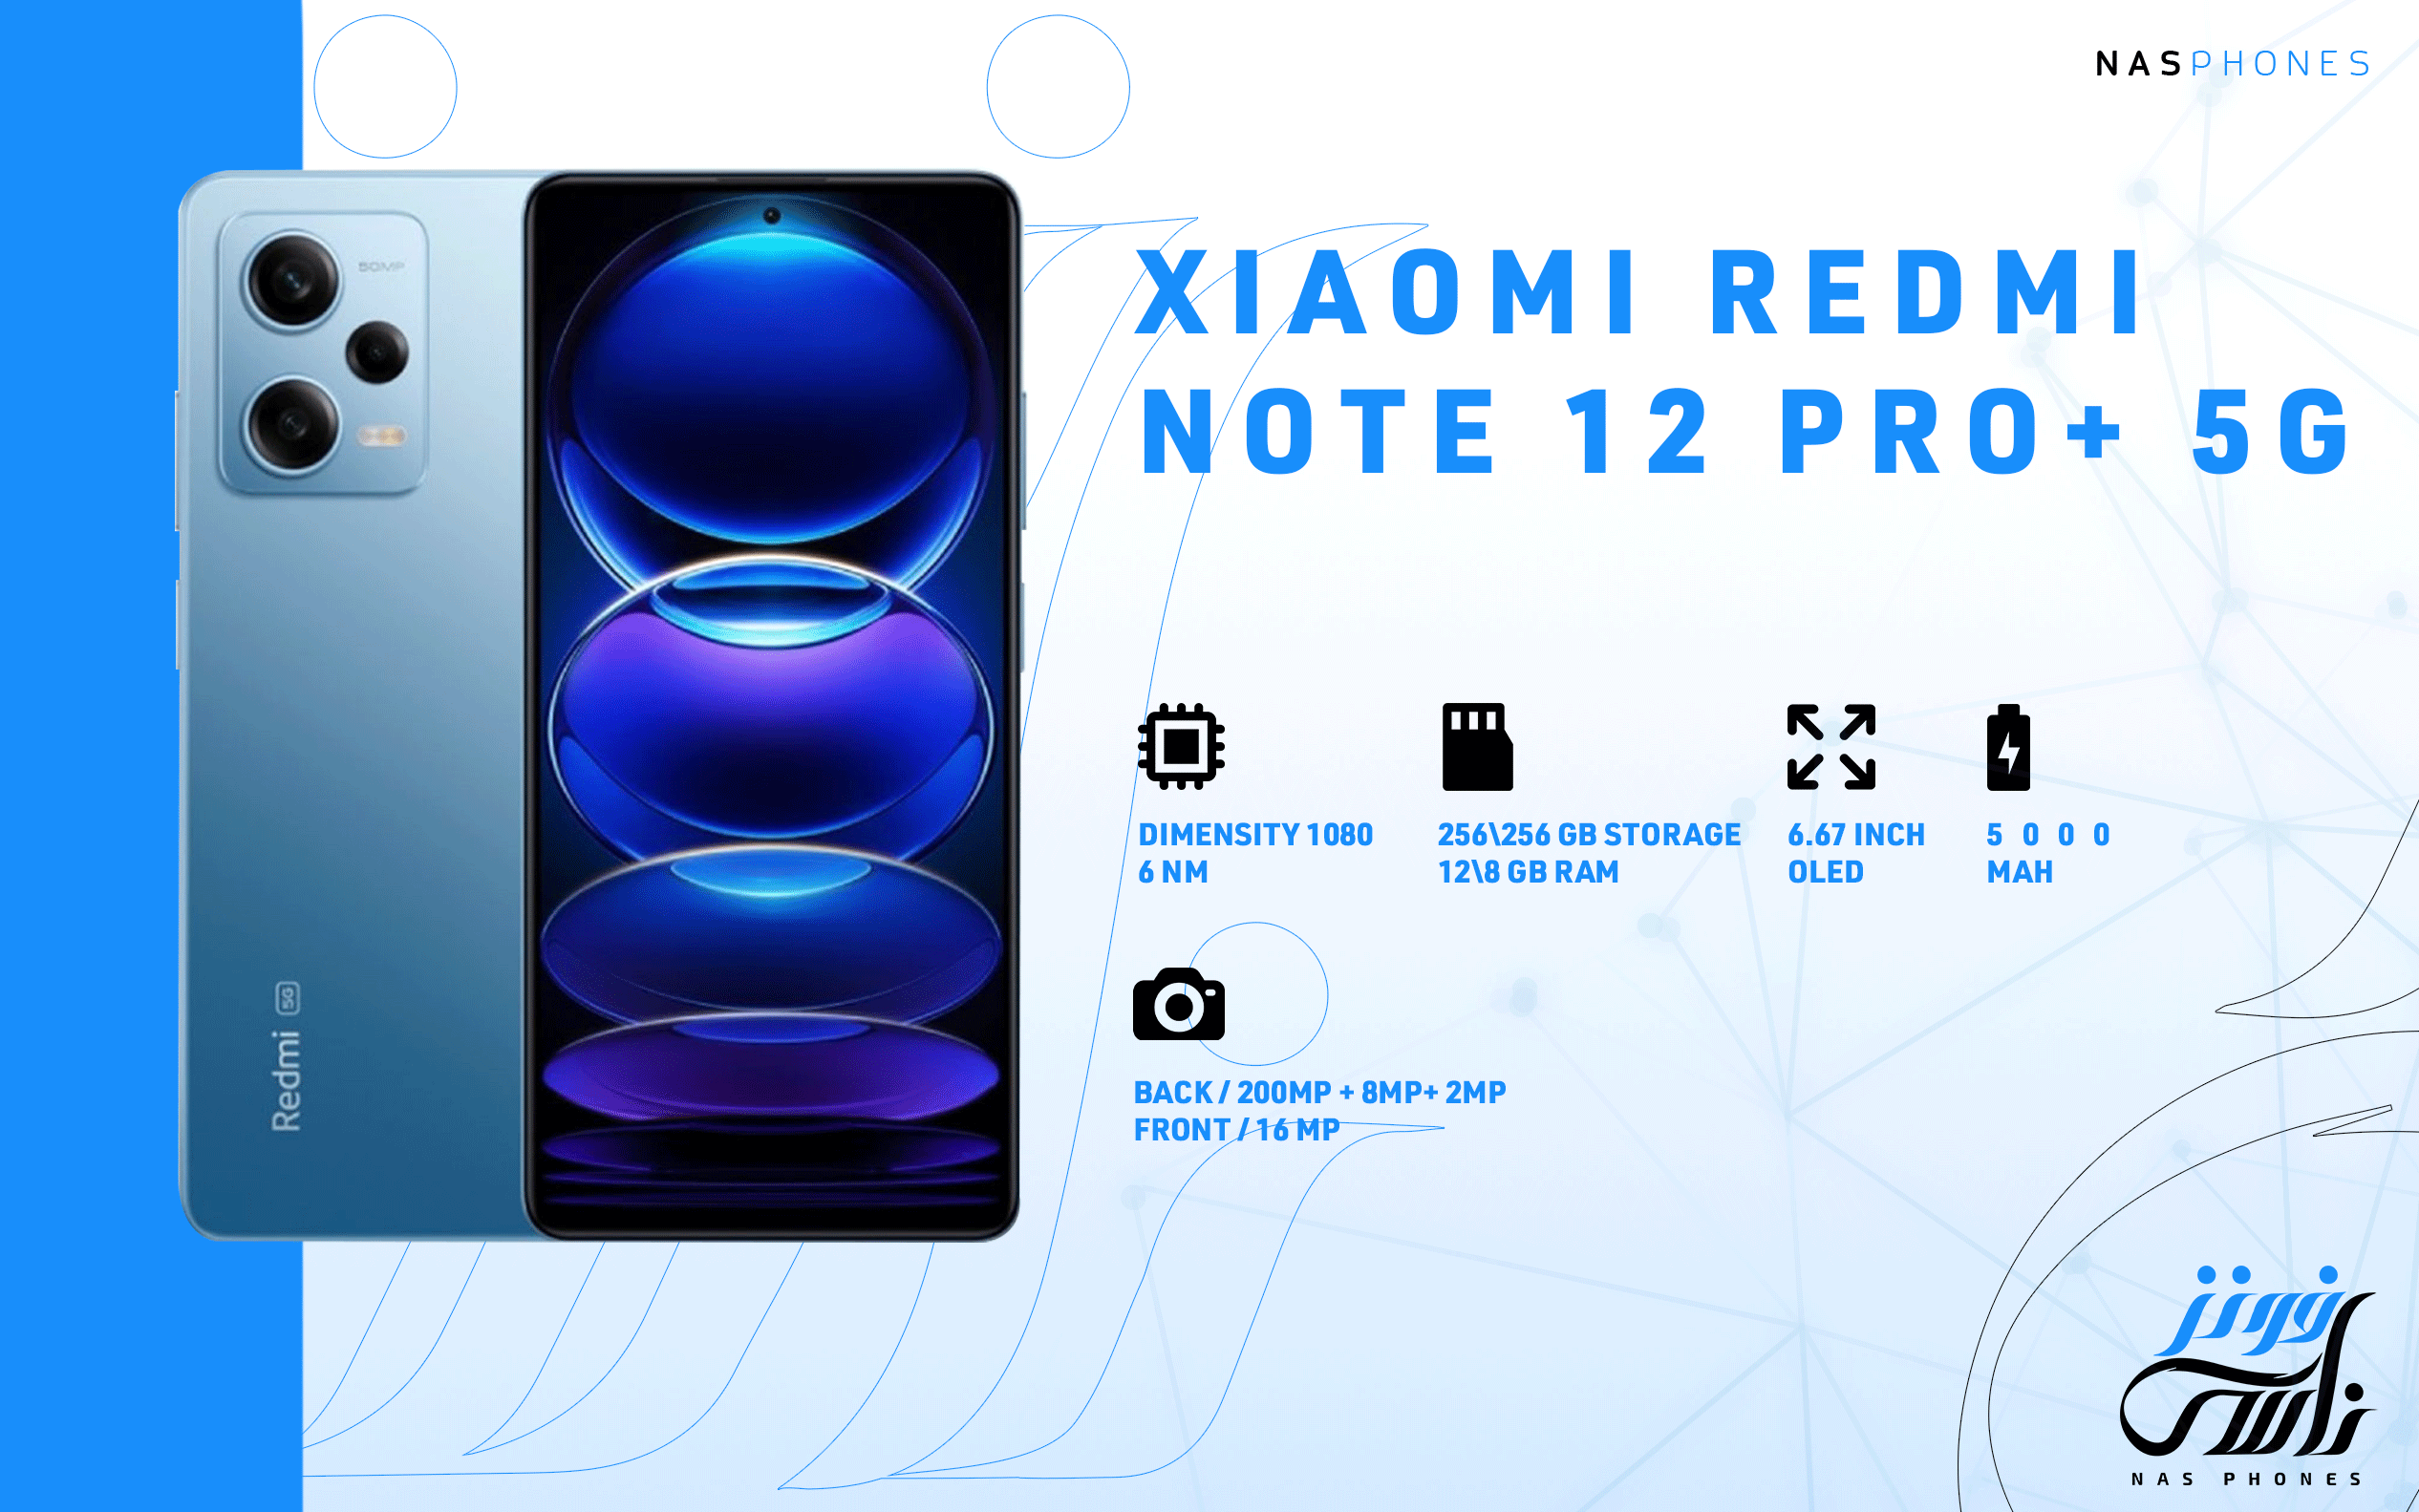 Xiaomi Redmi Note 12 Pro Plus 5G